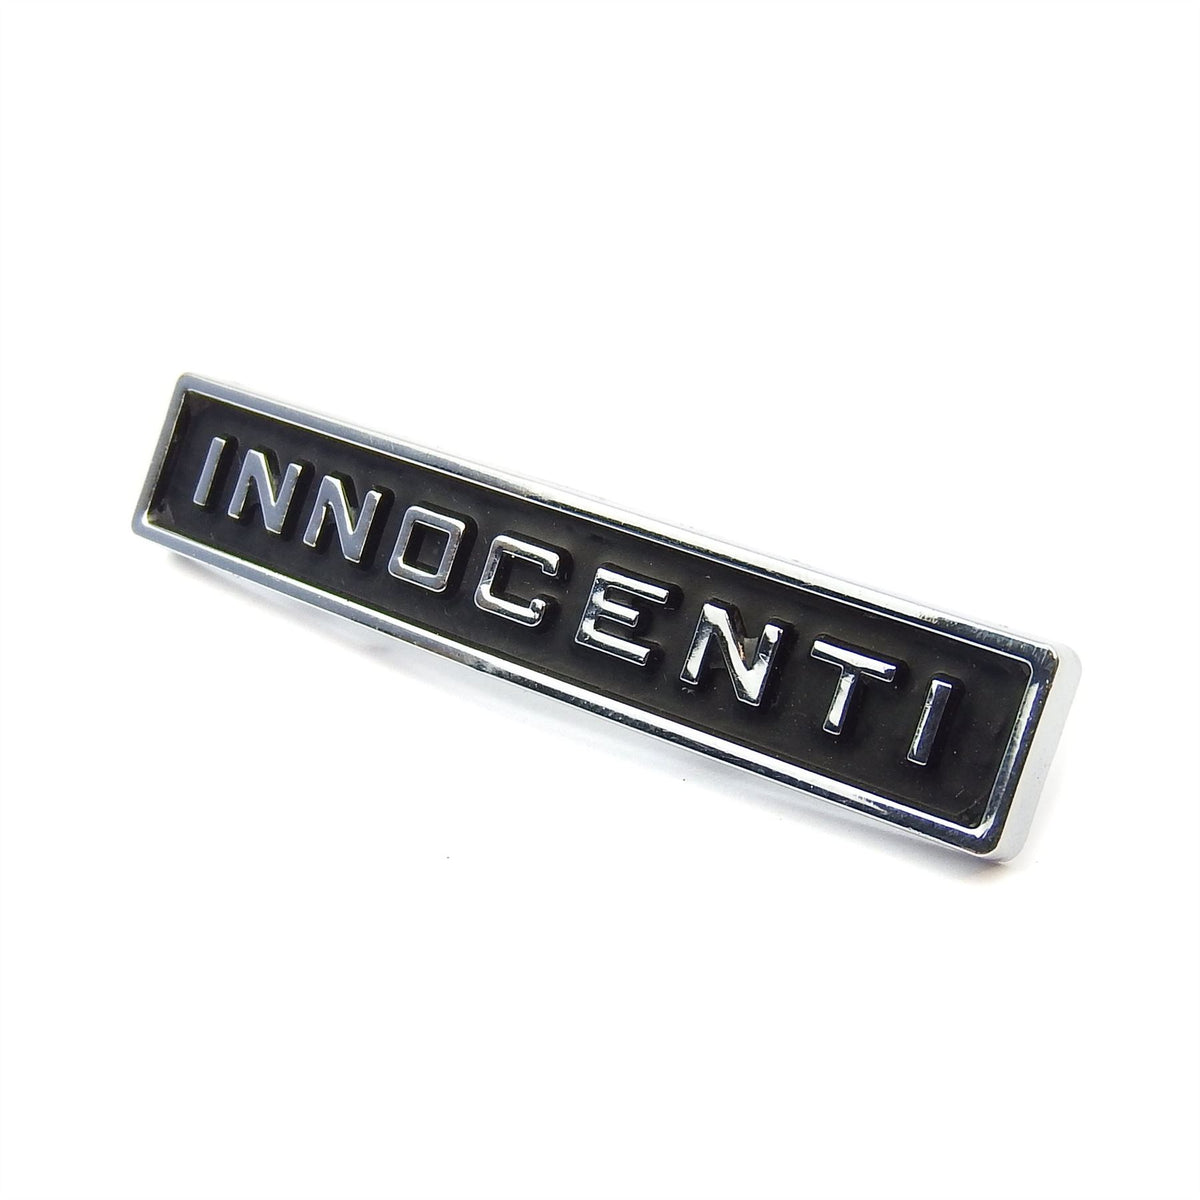 Lambretta GP Rear Frame Innocenti Badge - Black